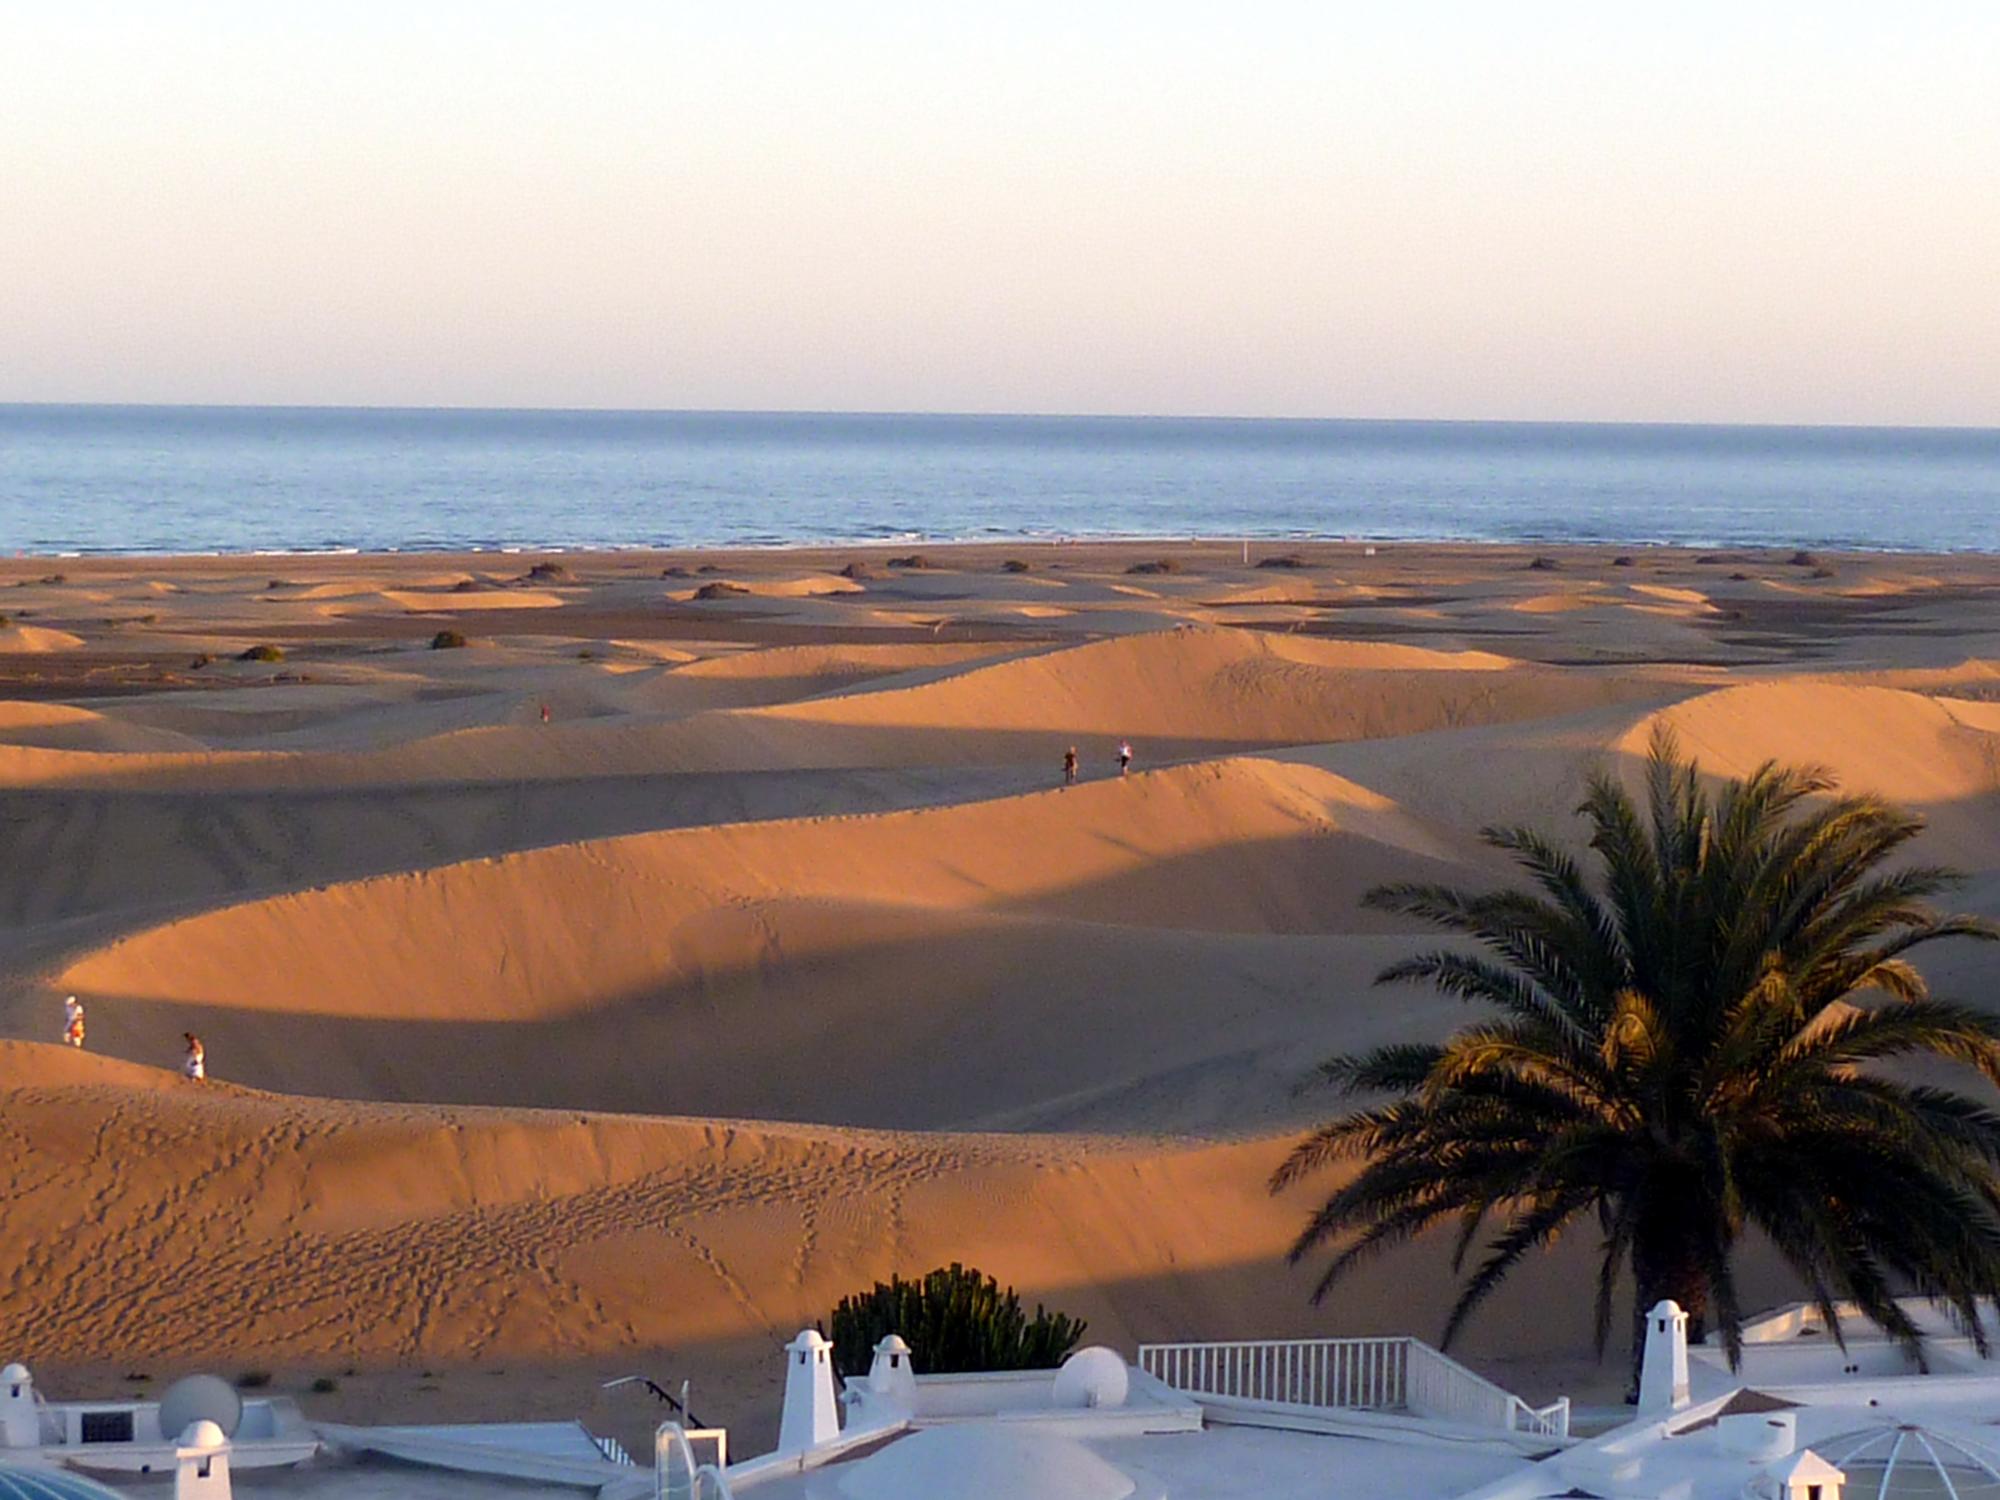  Canary Islands - Dunes #3